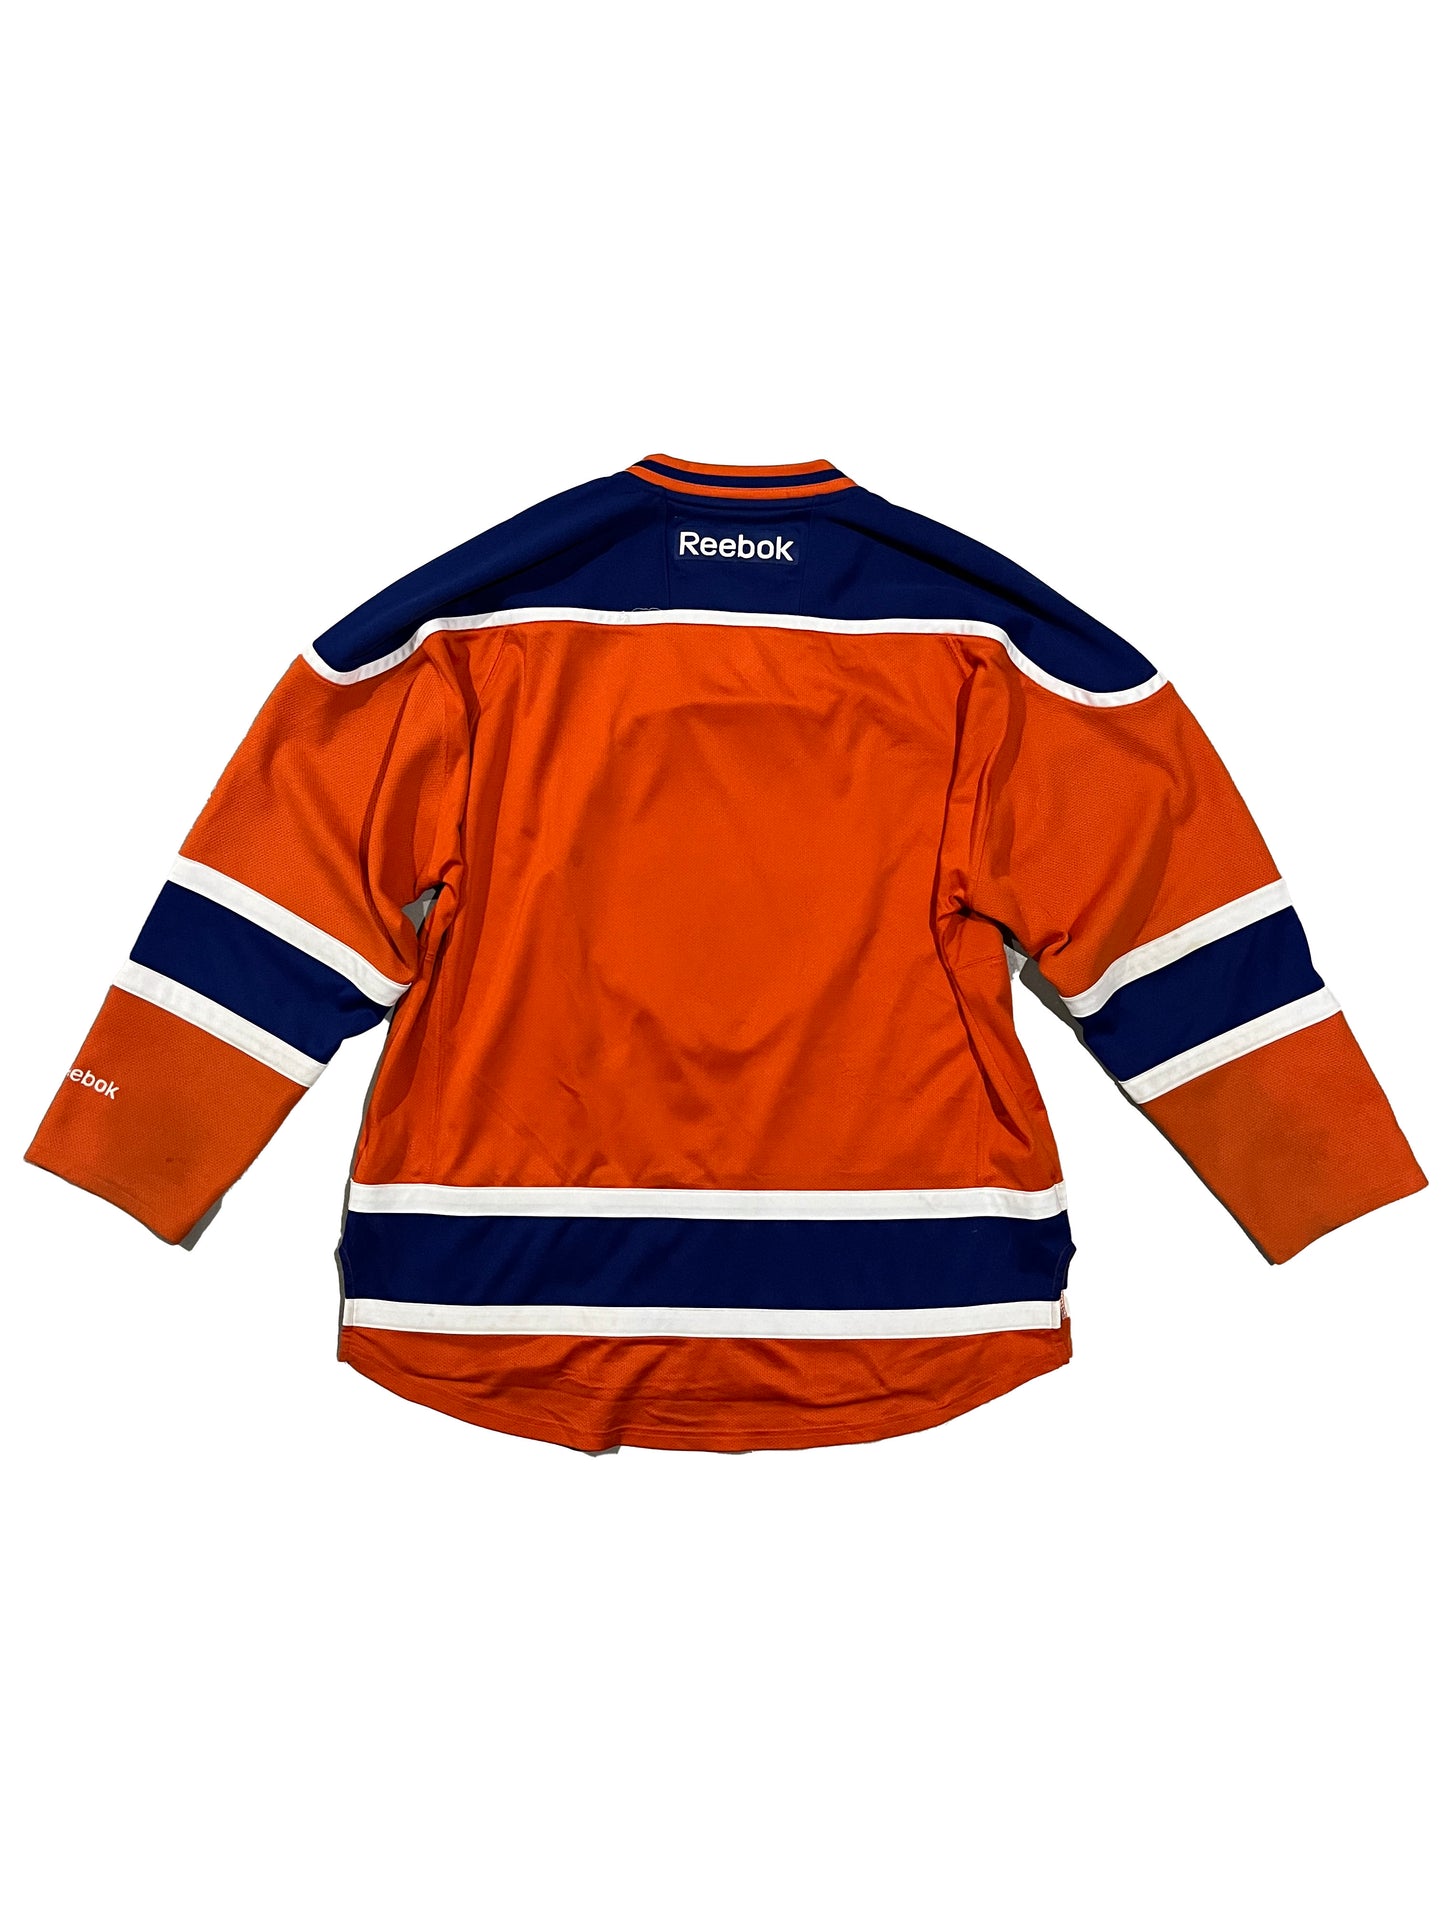 Reebok Authentic Oilers Jersey